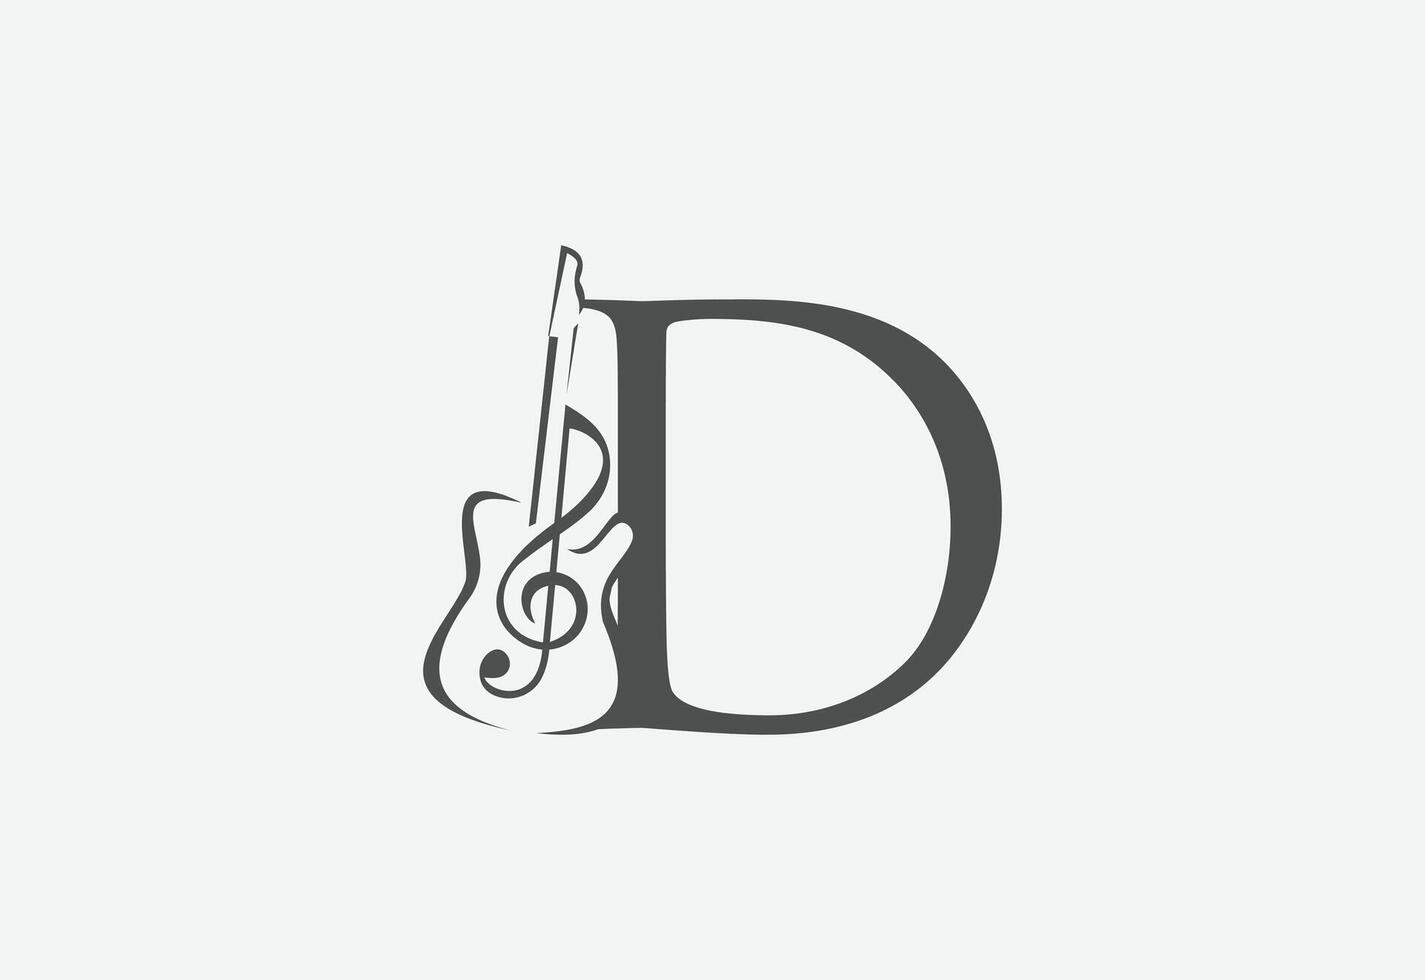 Music icon with latter D logo design creative concept vector